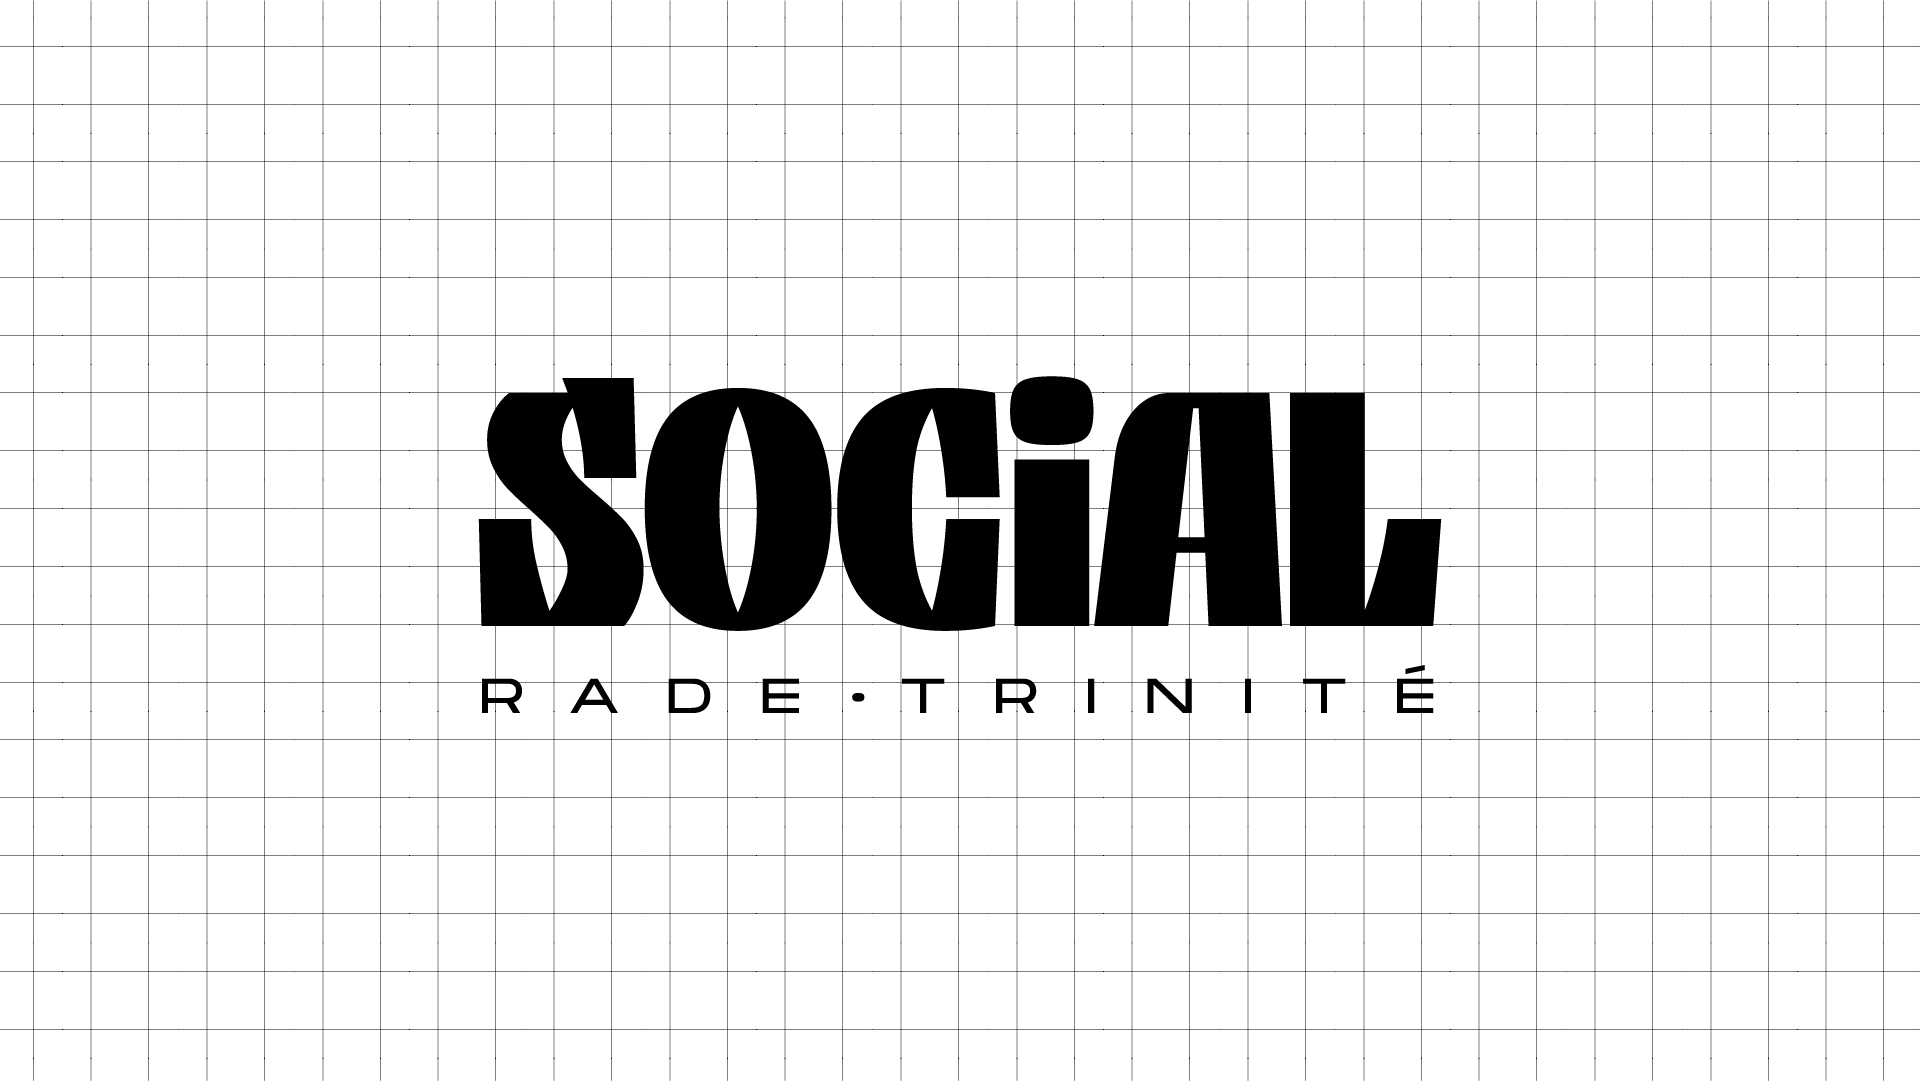 Logo Social